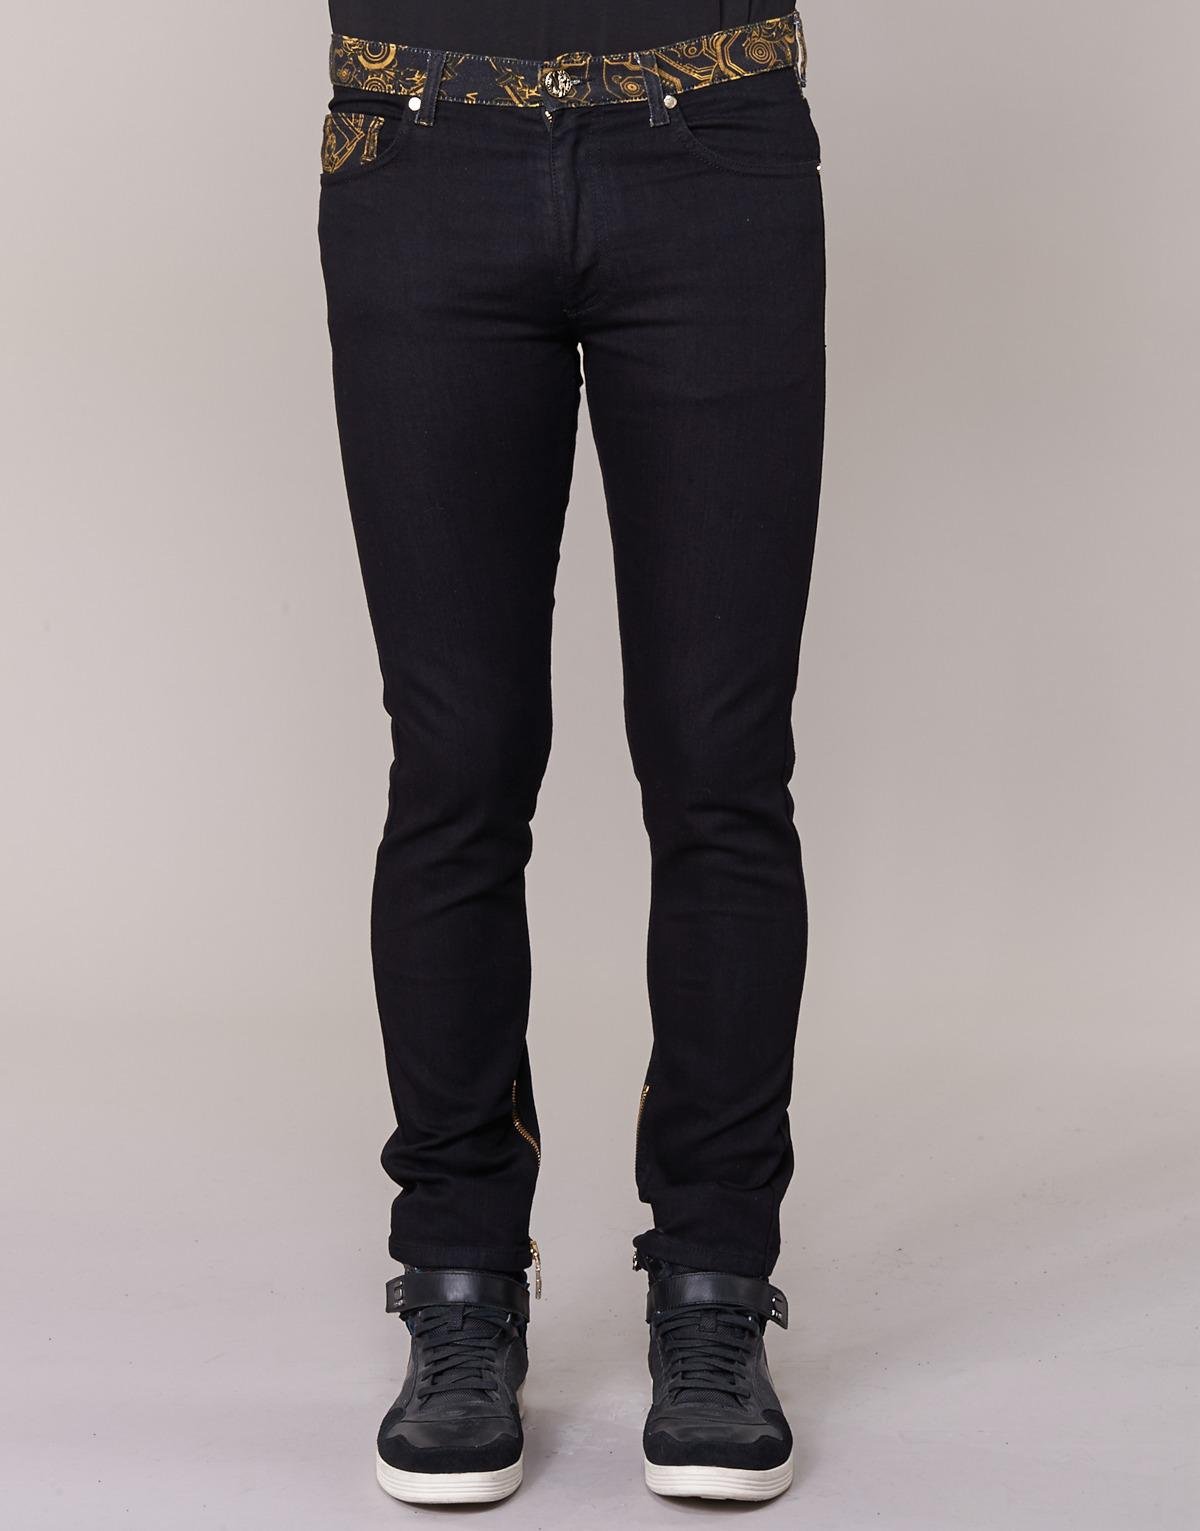 Versace Jeans women/'s dark deep indigo jeans skinny fit stretch